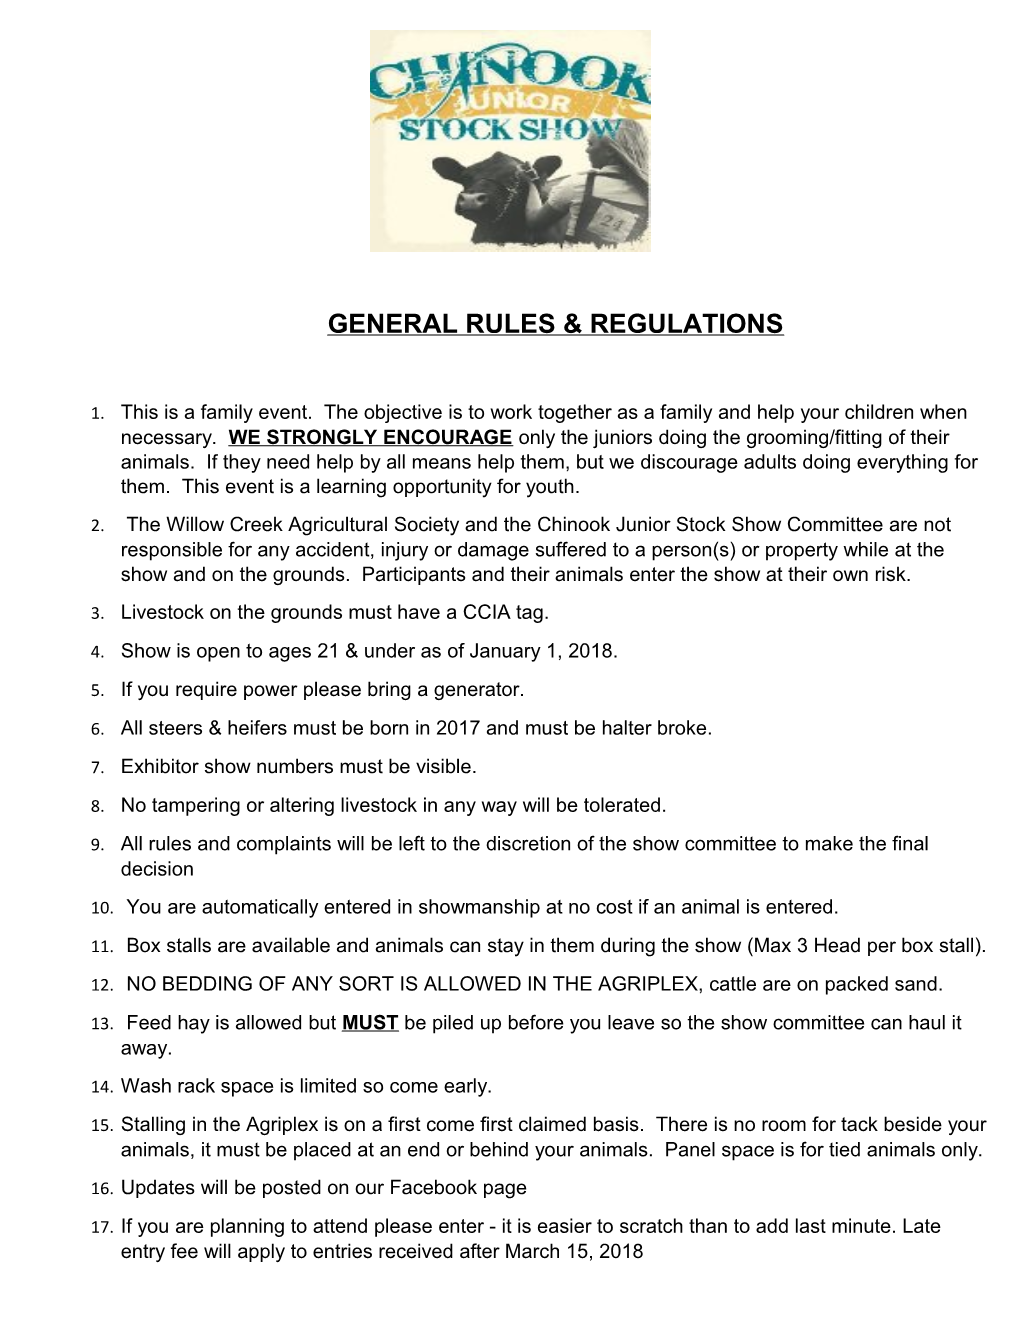 General Rules & Regulations